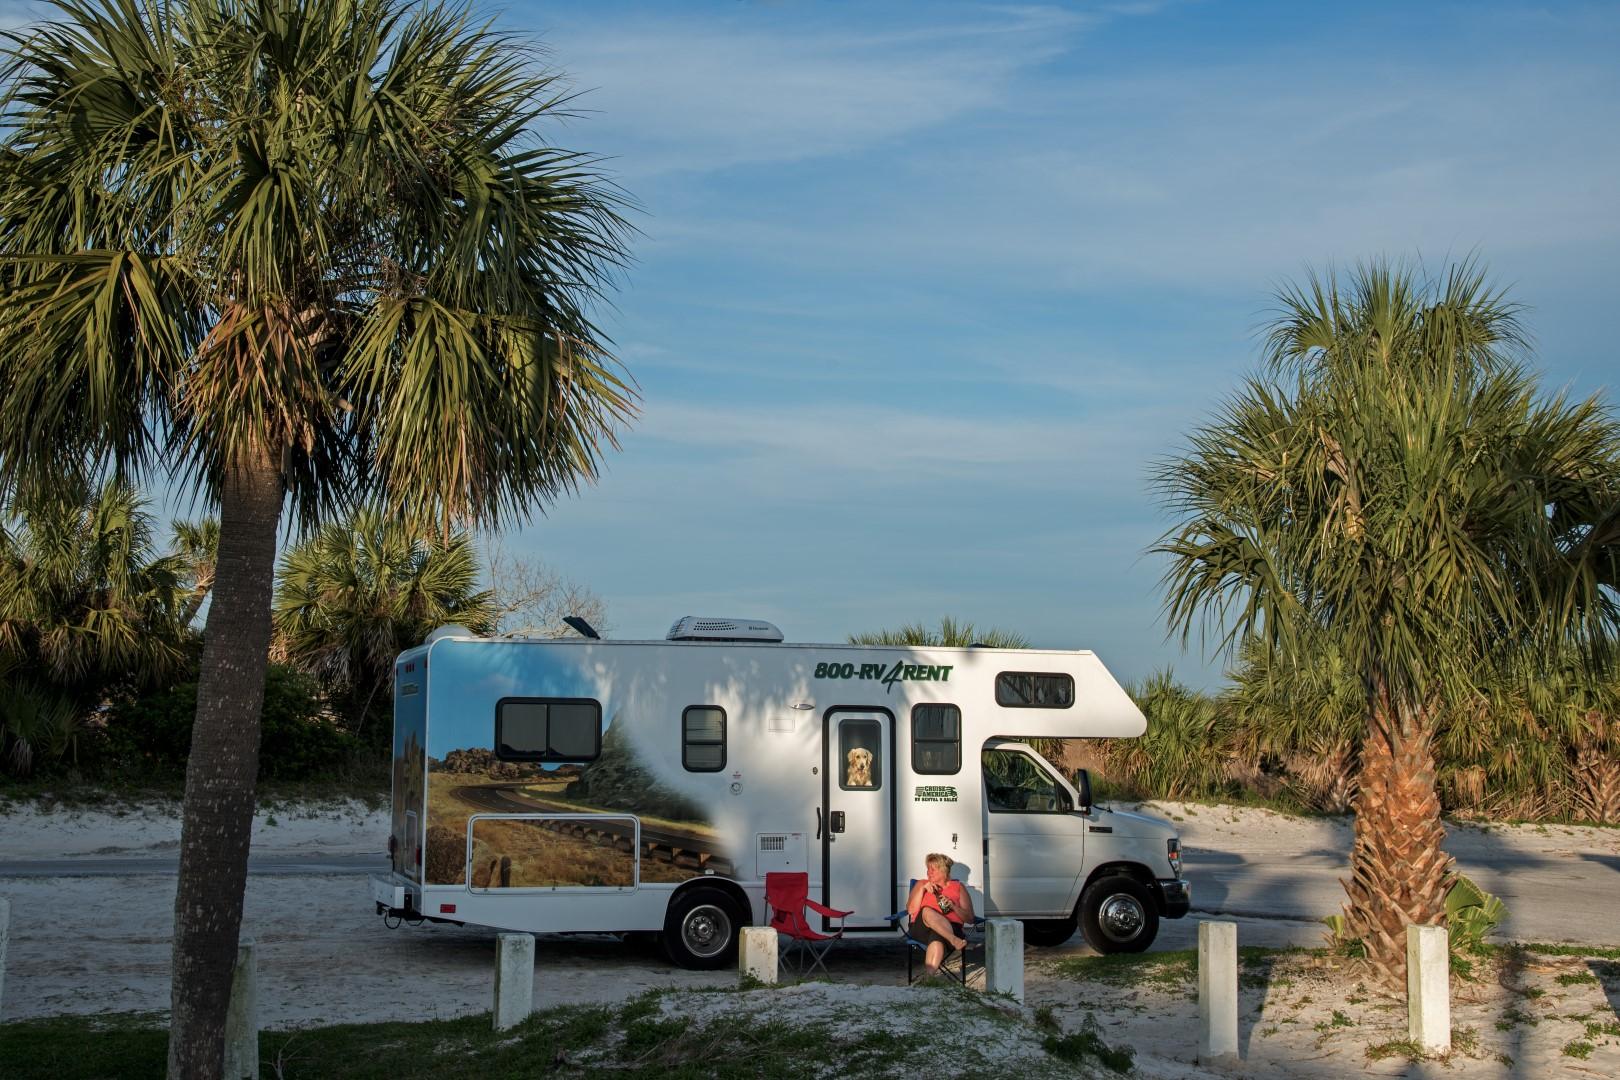 Plaże Florydy i Archipelag Florida Keys - trasa podróży kamperem – image %{index}